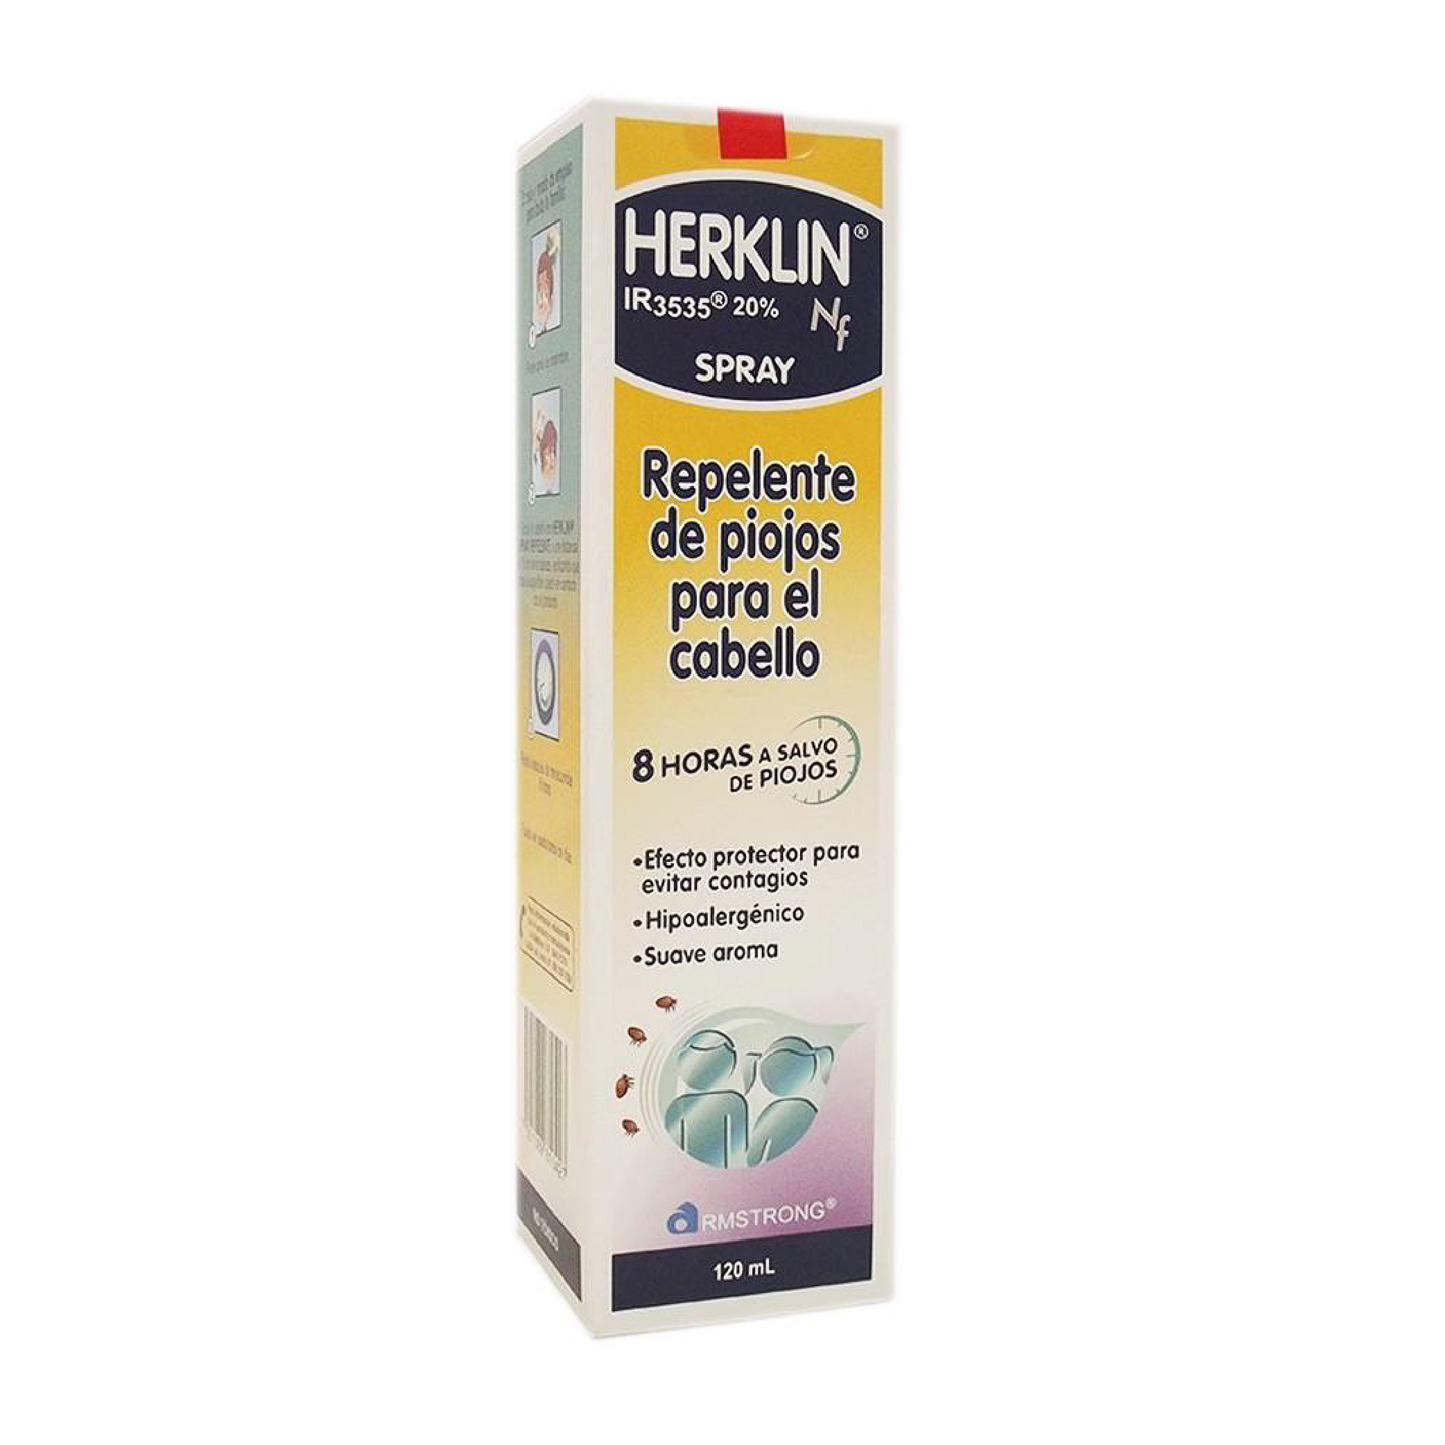 Herklin Spray (Repelente de piojos) 120 ml